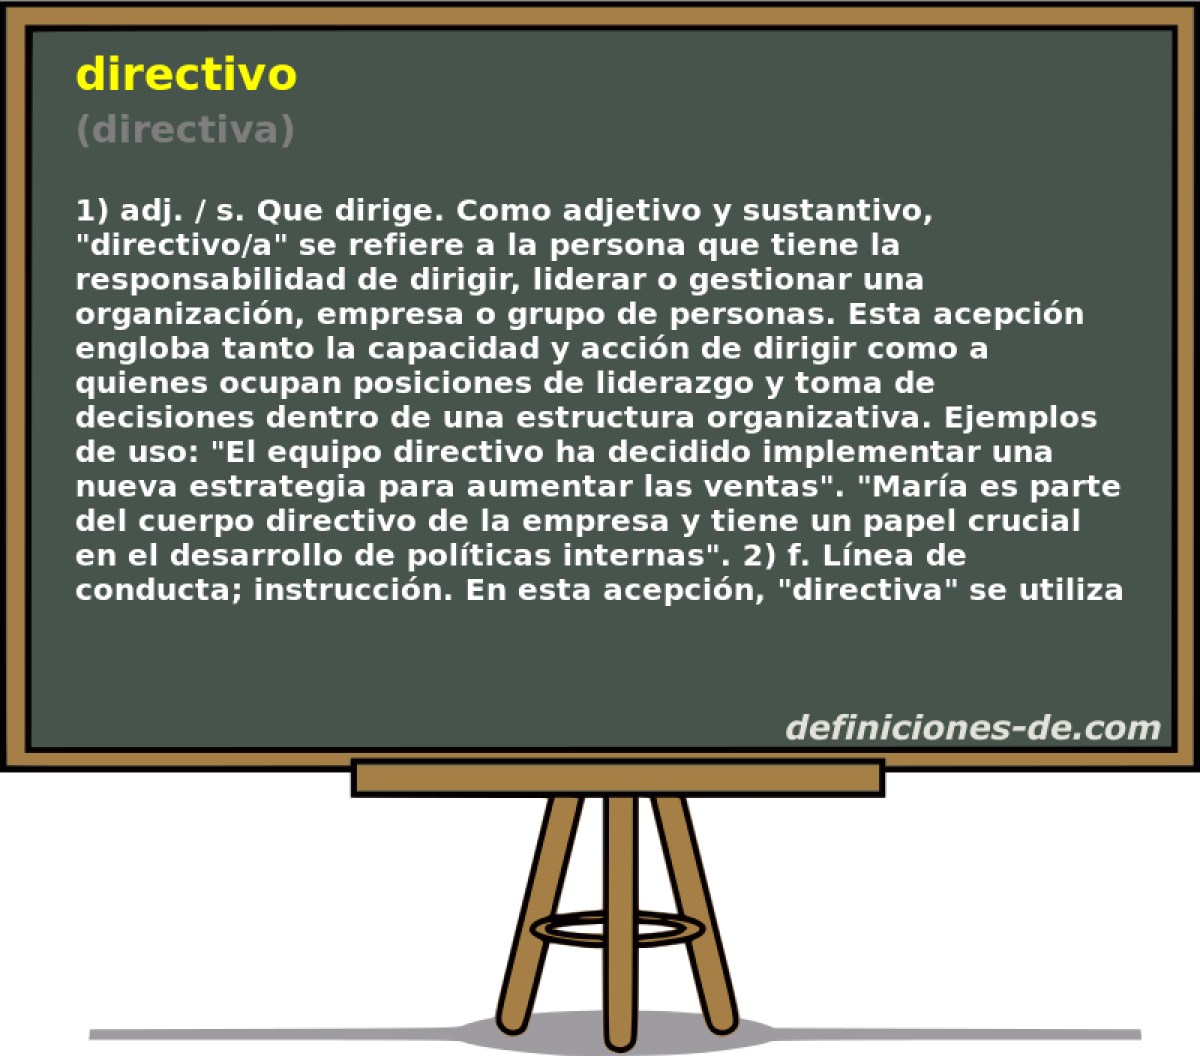 directivo (directiva)